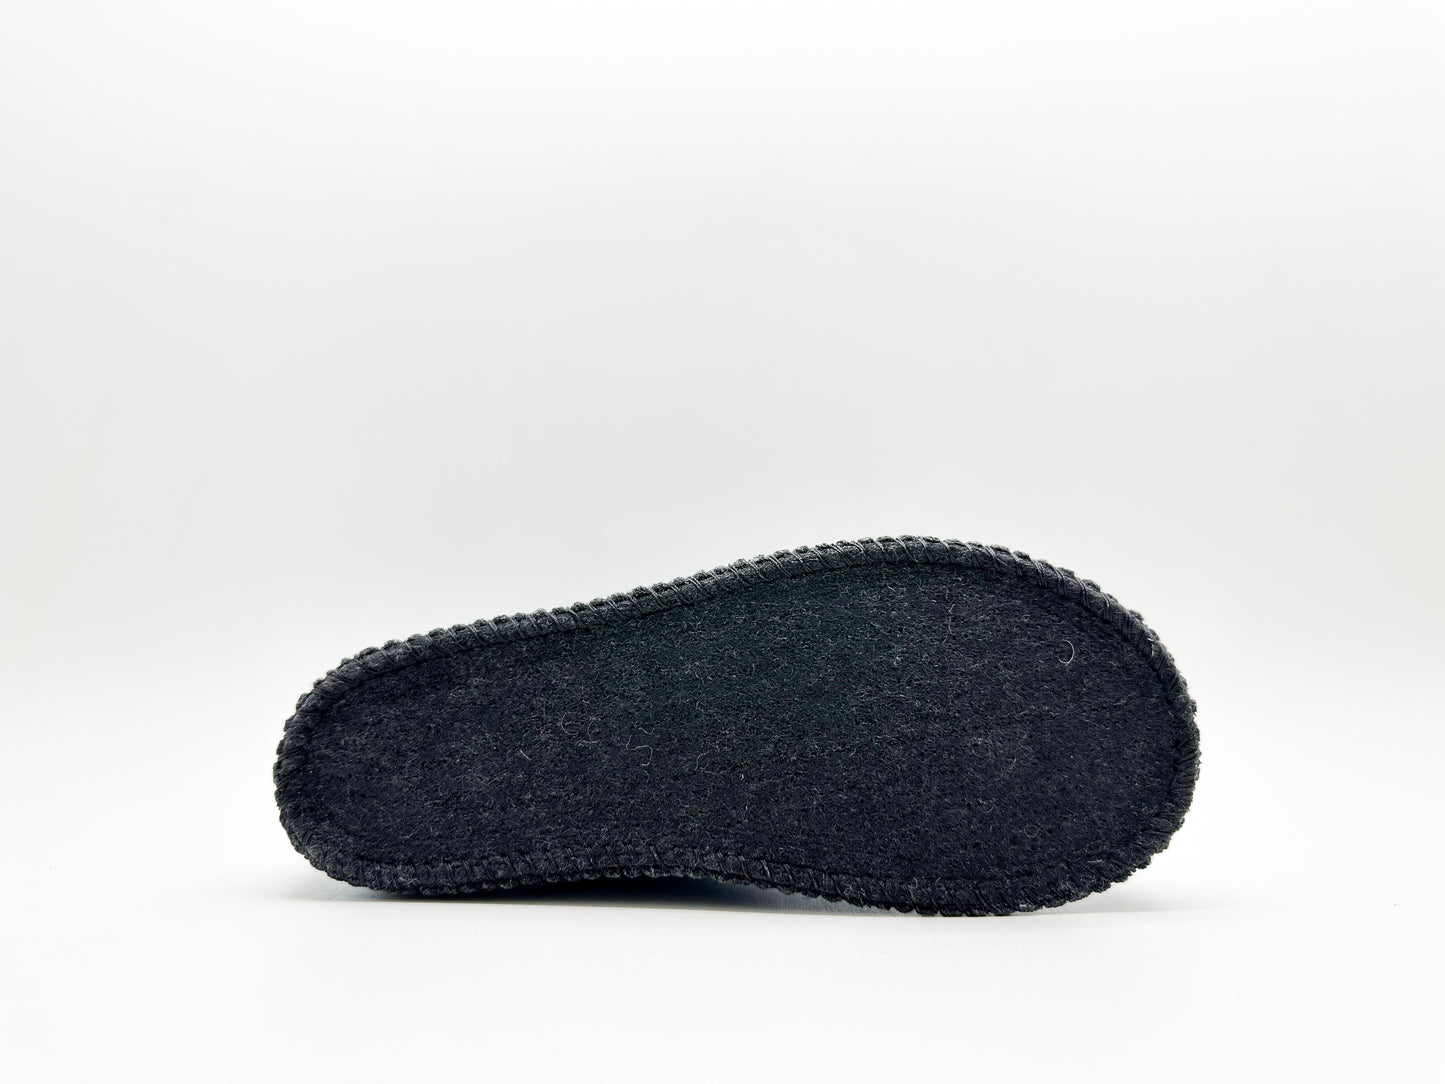 thies 1856 ® Mountain Wool Slipper Boot denim blue (K)